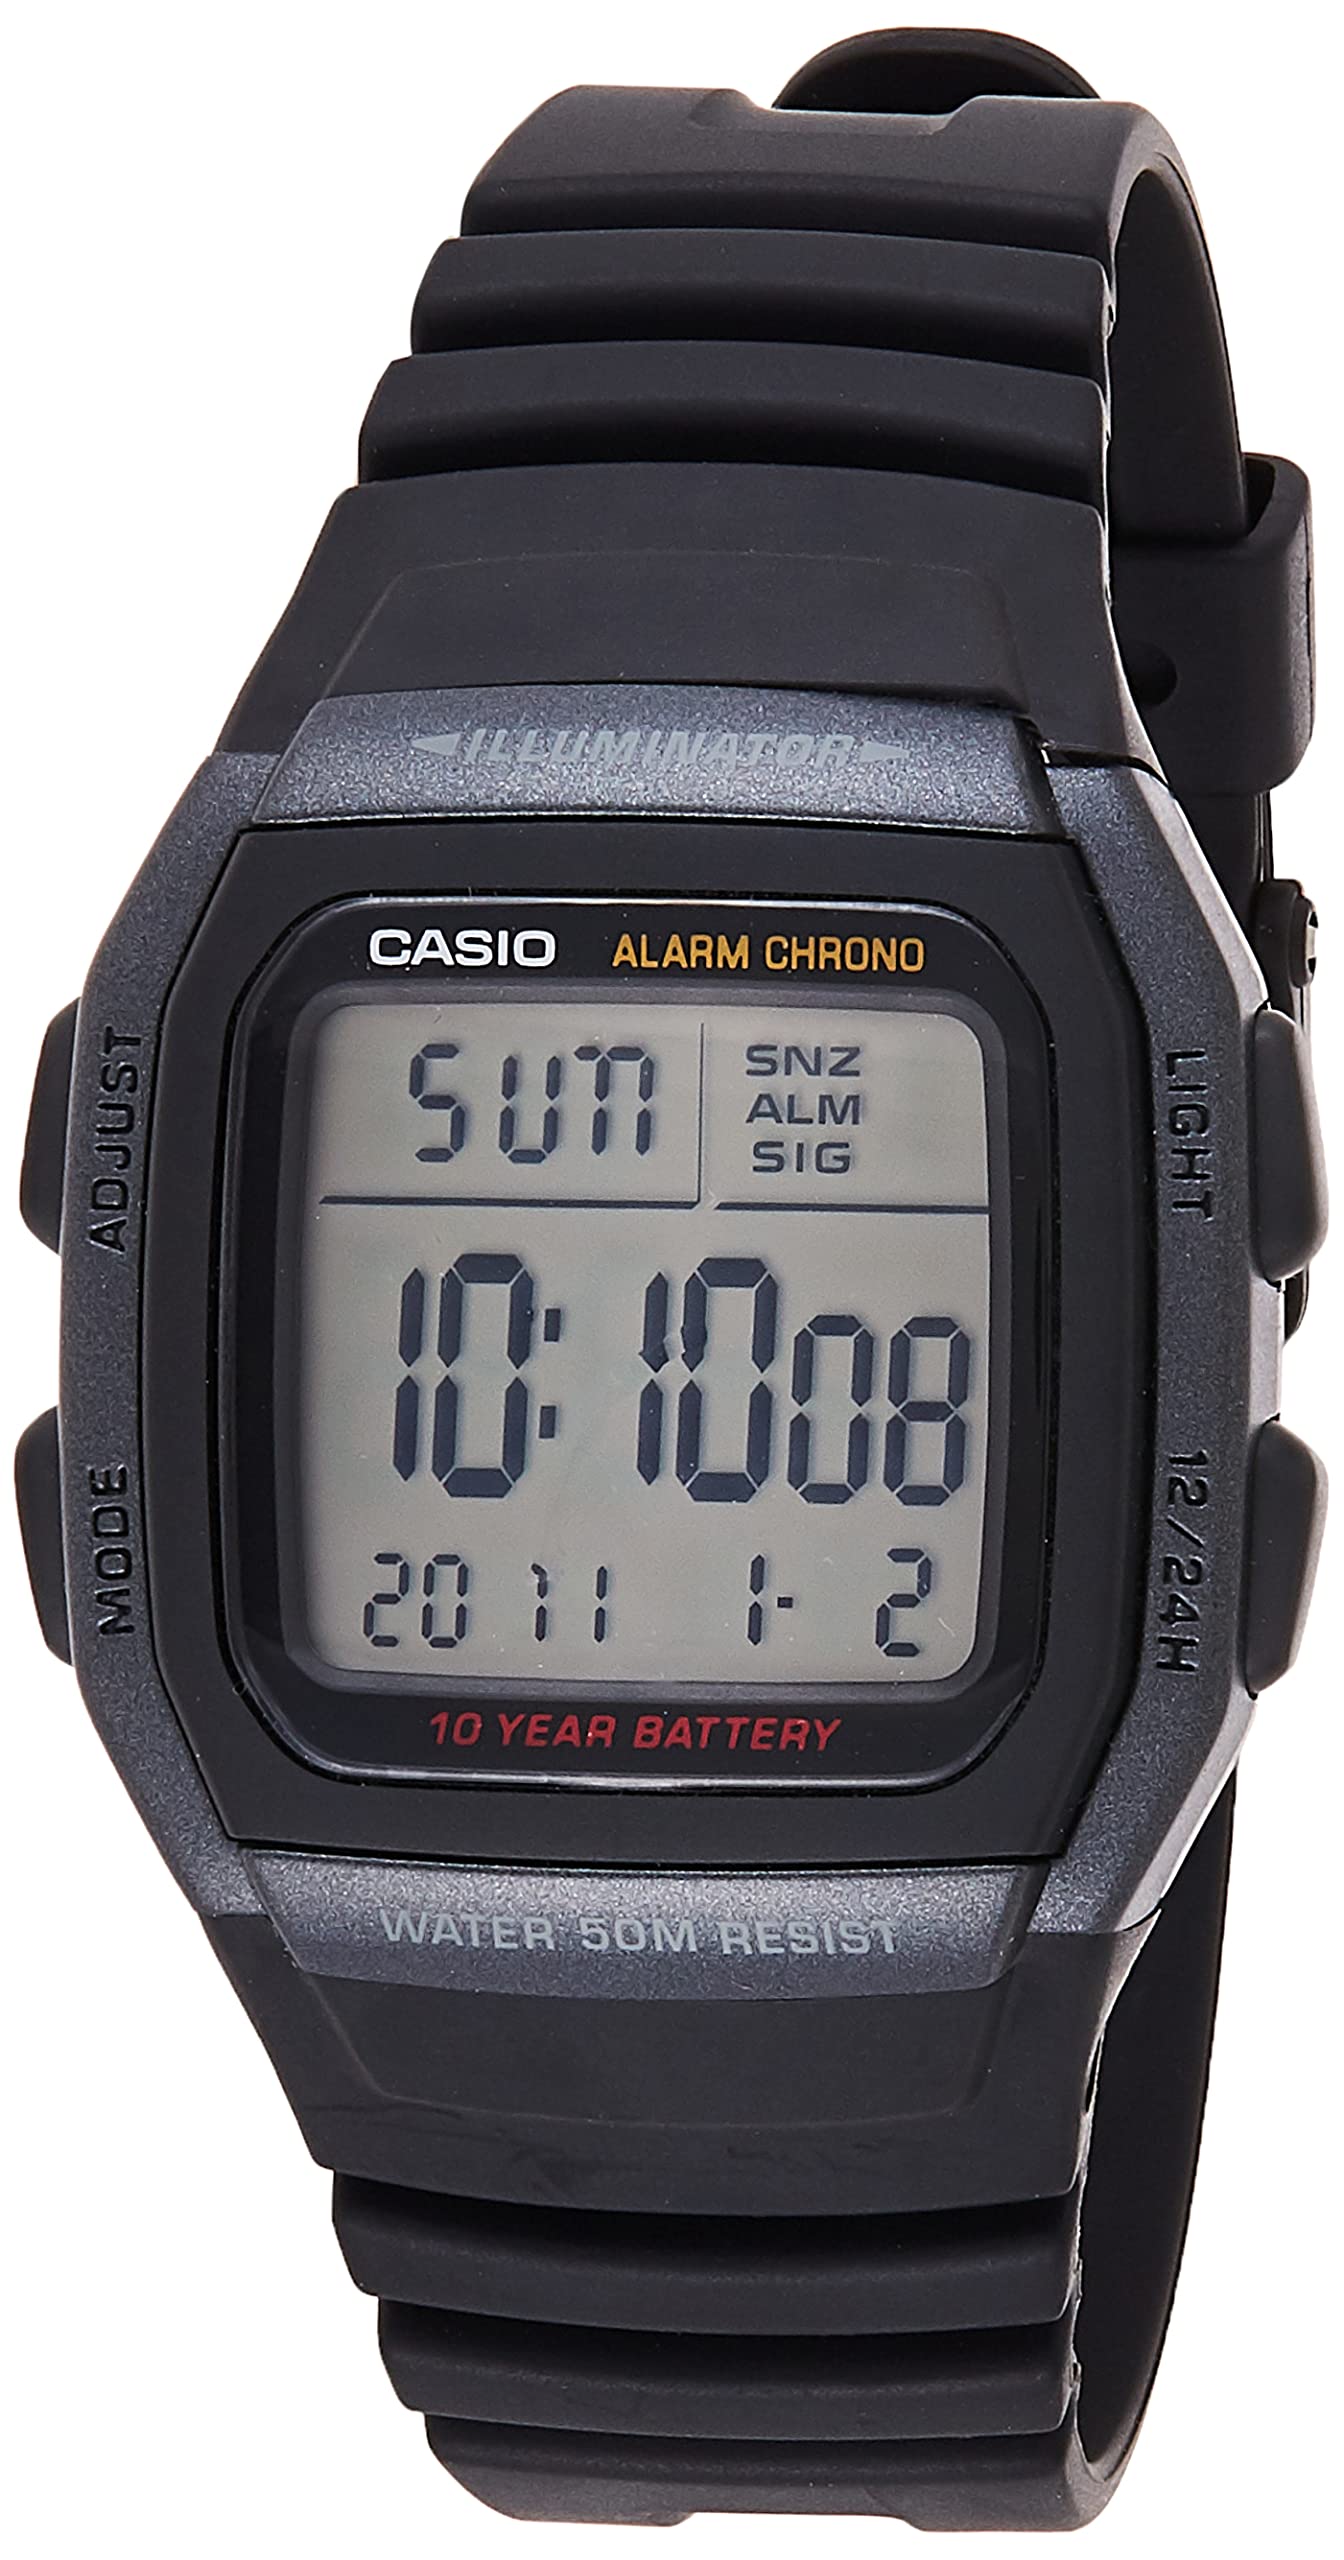 Casio Men's W96H-1AV Stainless Steel Sport Watch with Black Band